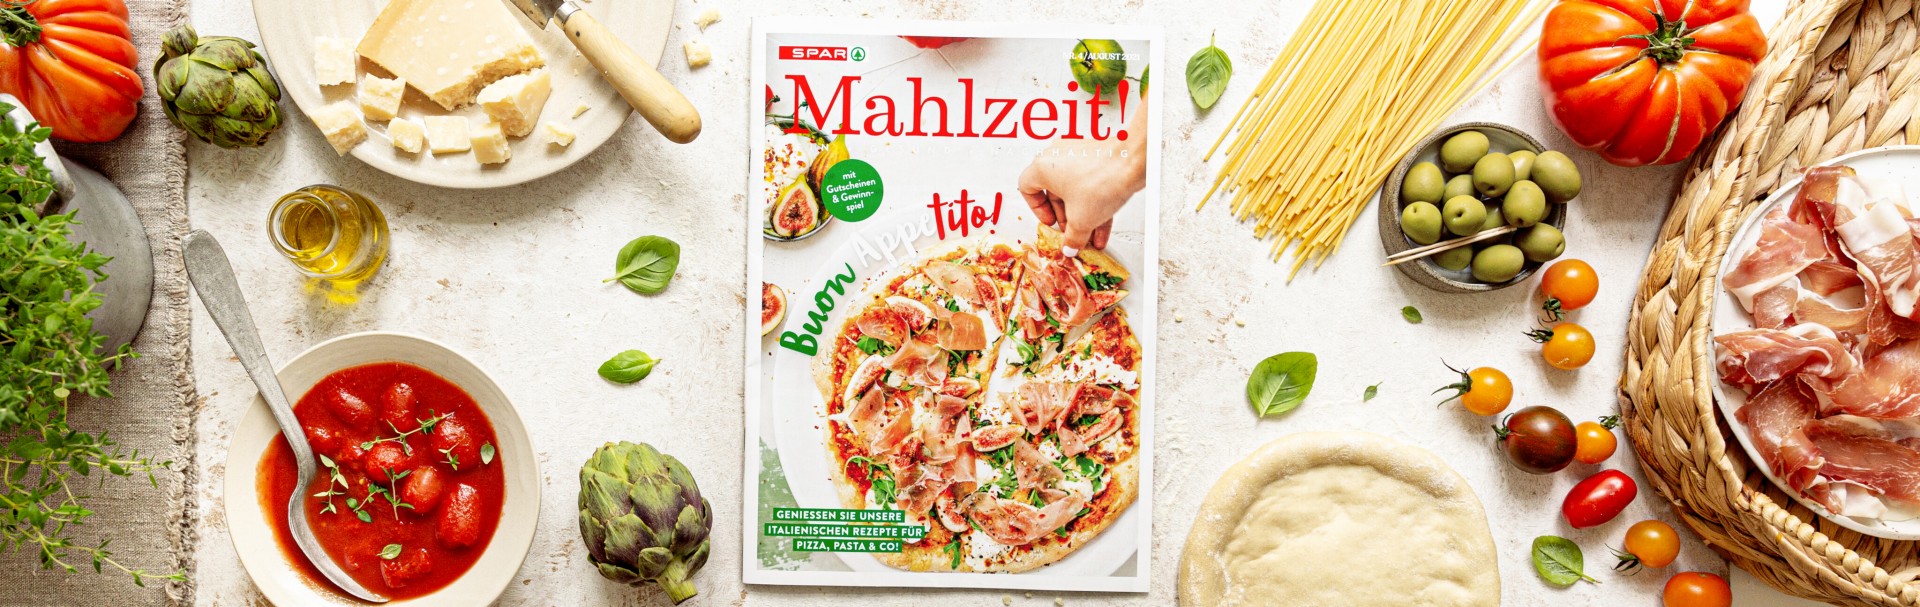 SPAR Mahlzeit Magazin Header Italien 21